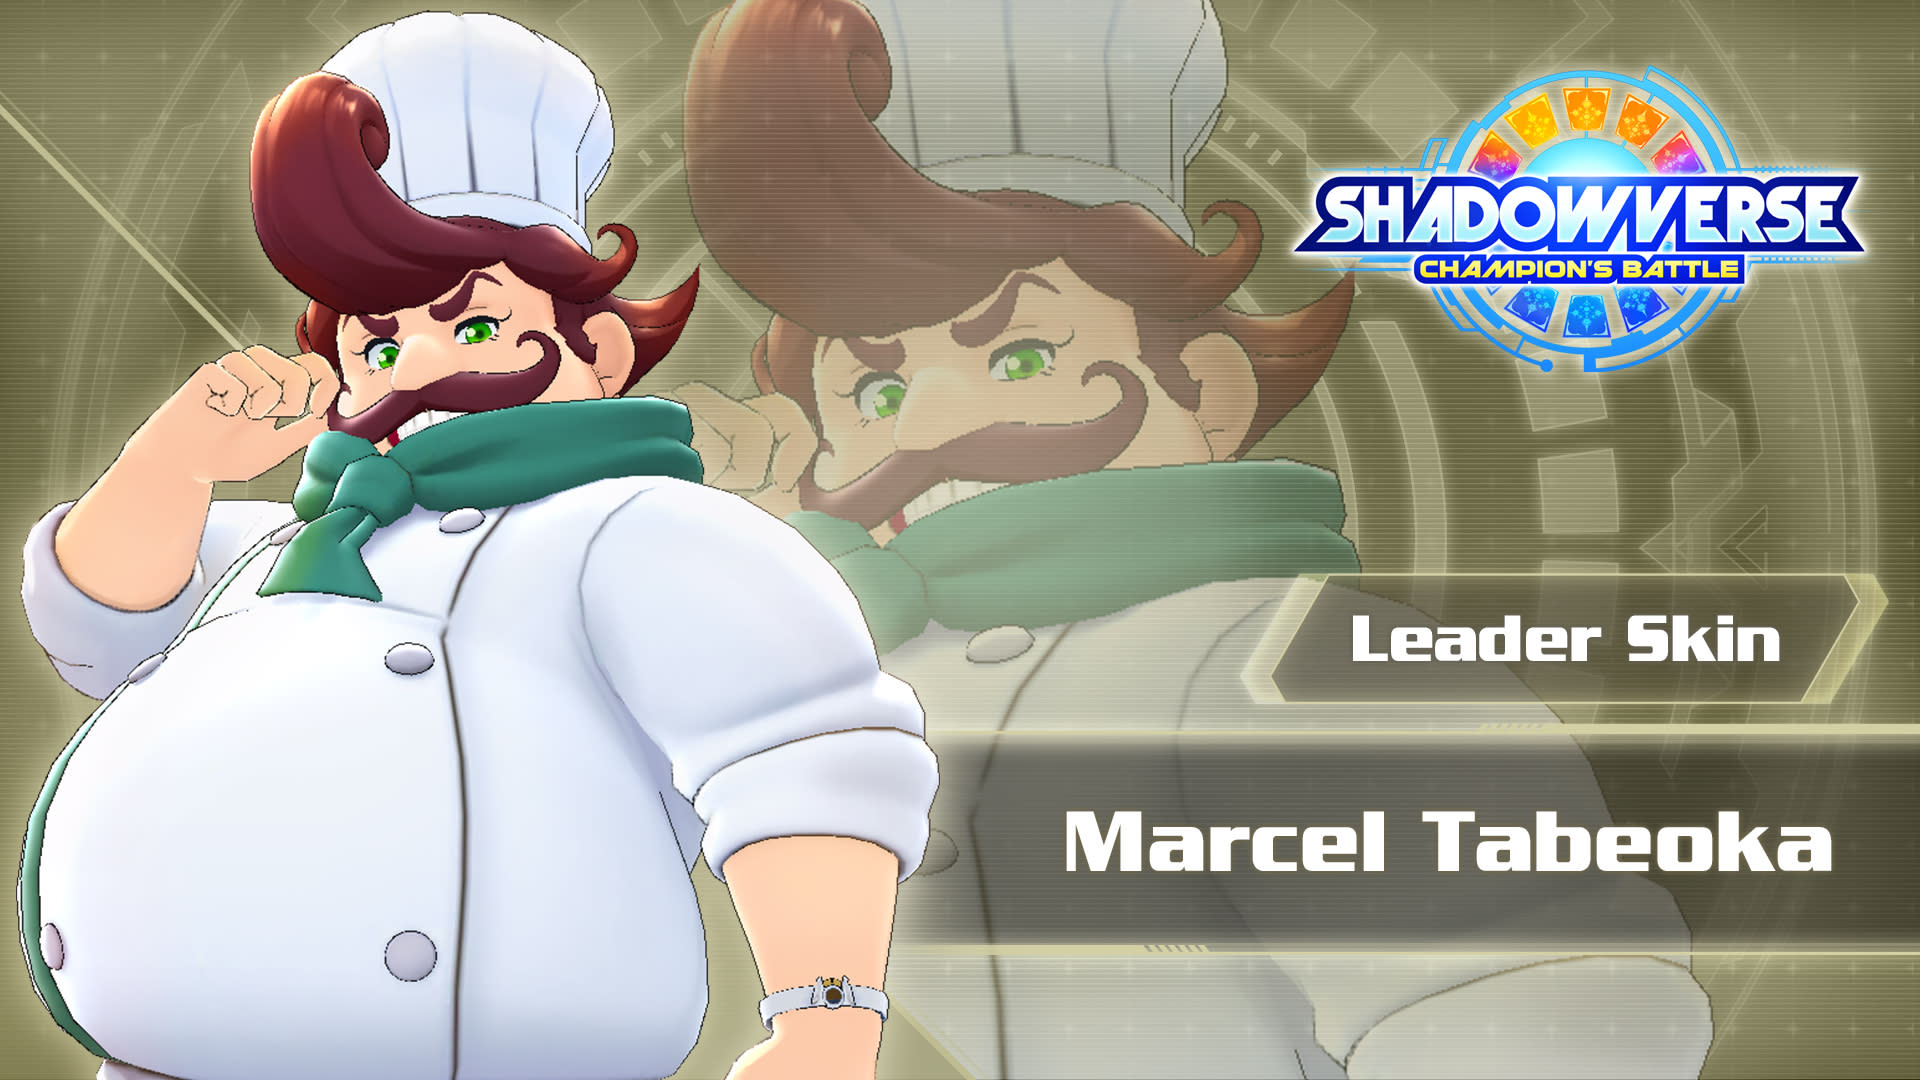 Leader Skin: "Marcel Tabeoka"